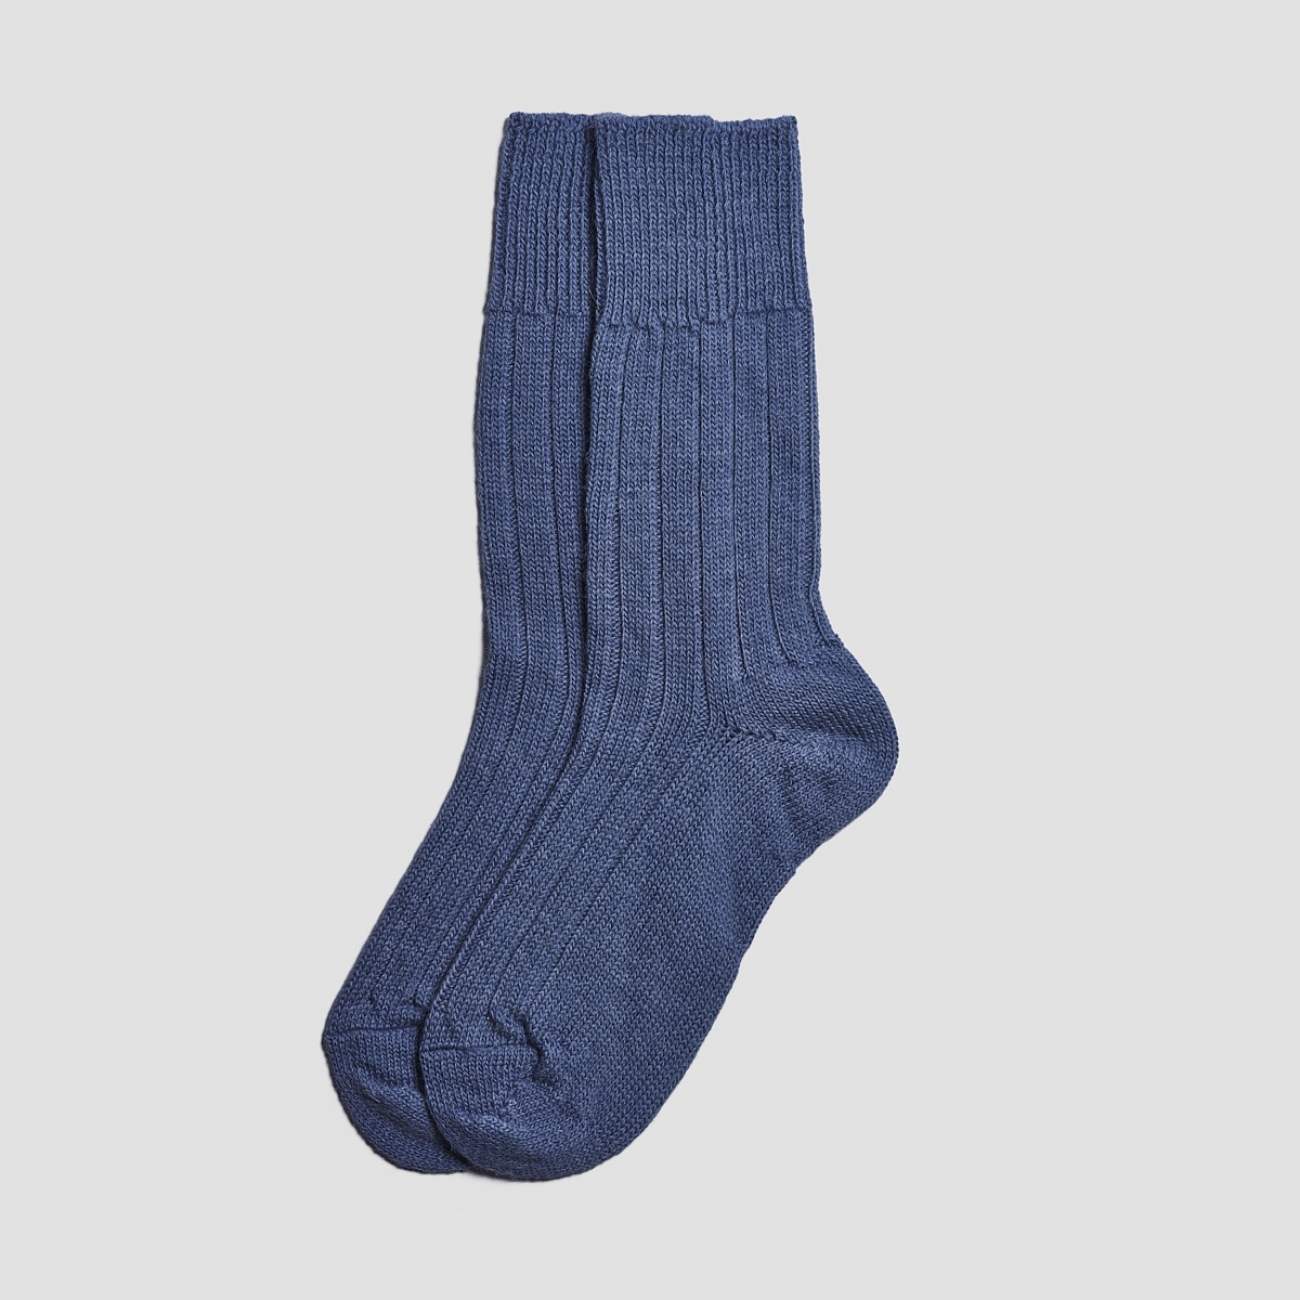 Blueberry Alpaca Bed Socks